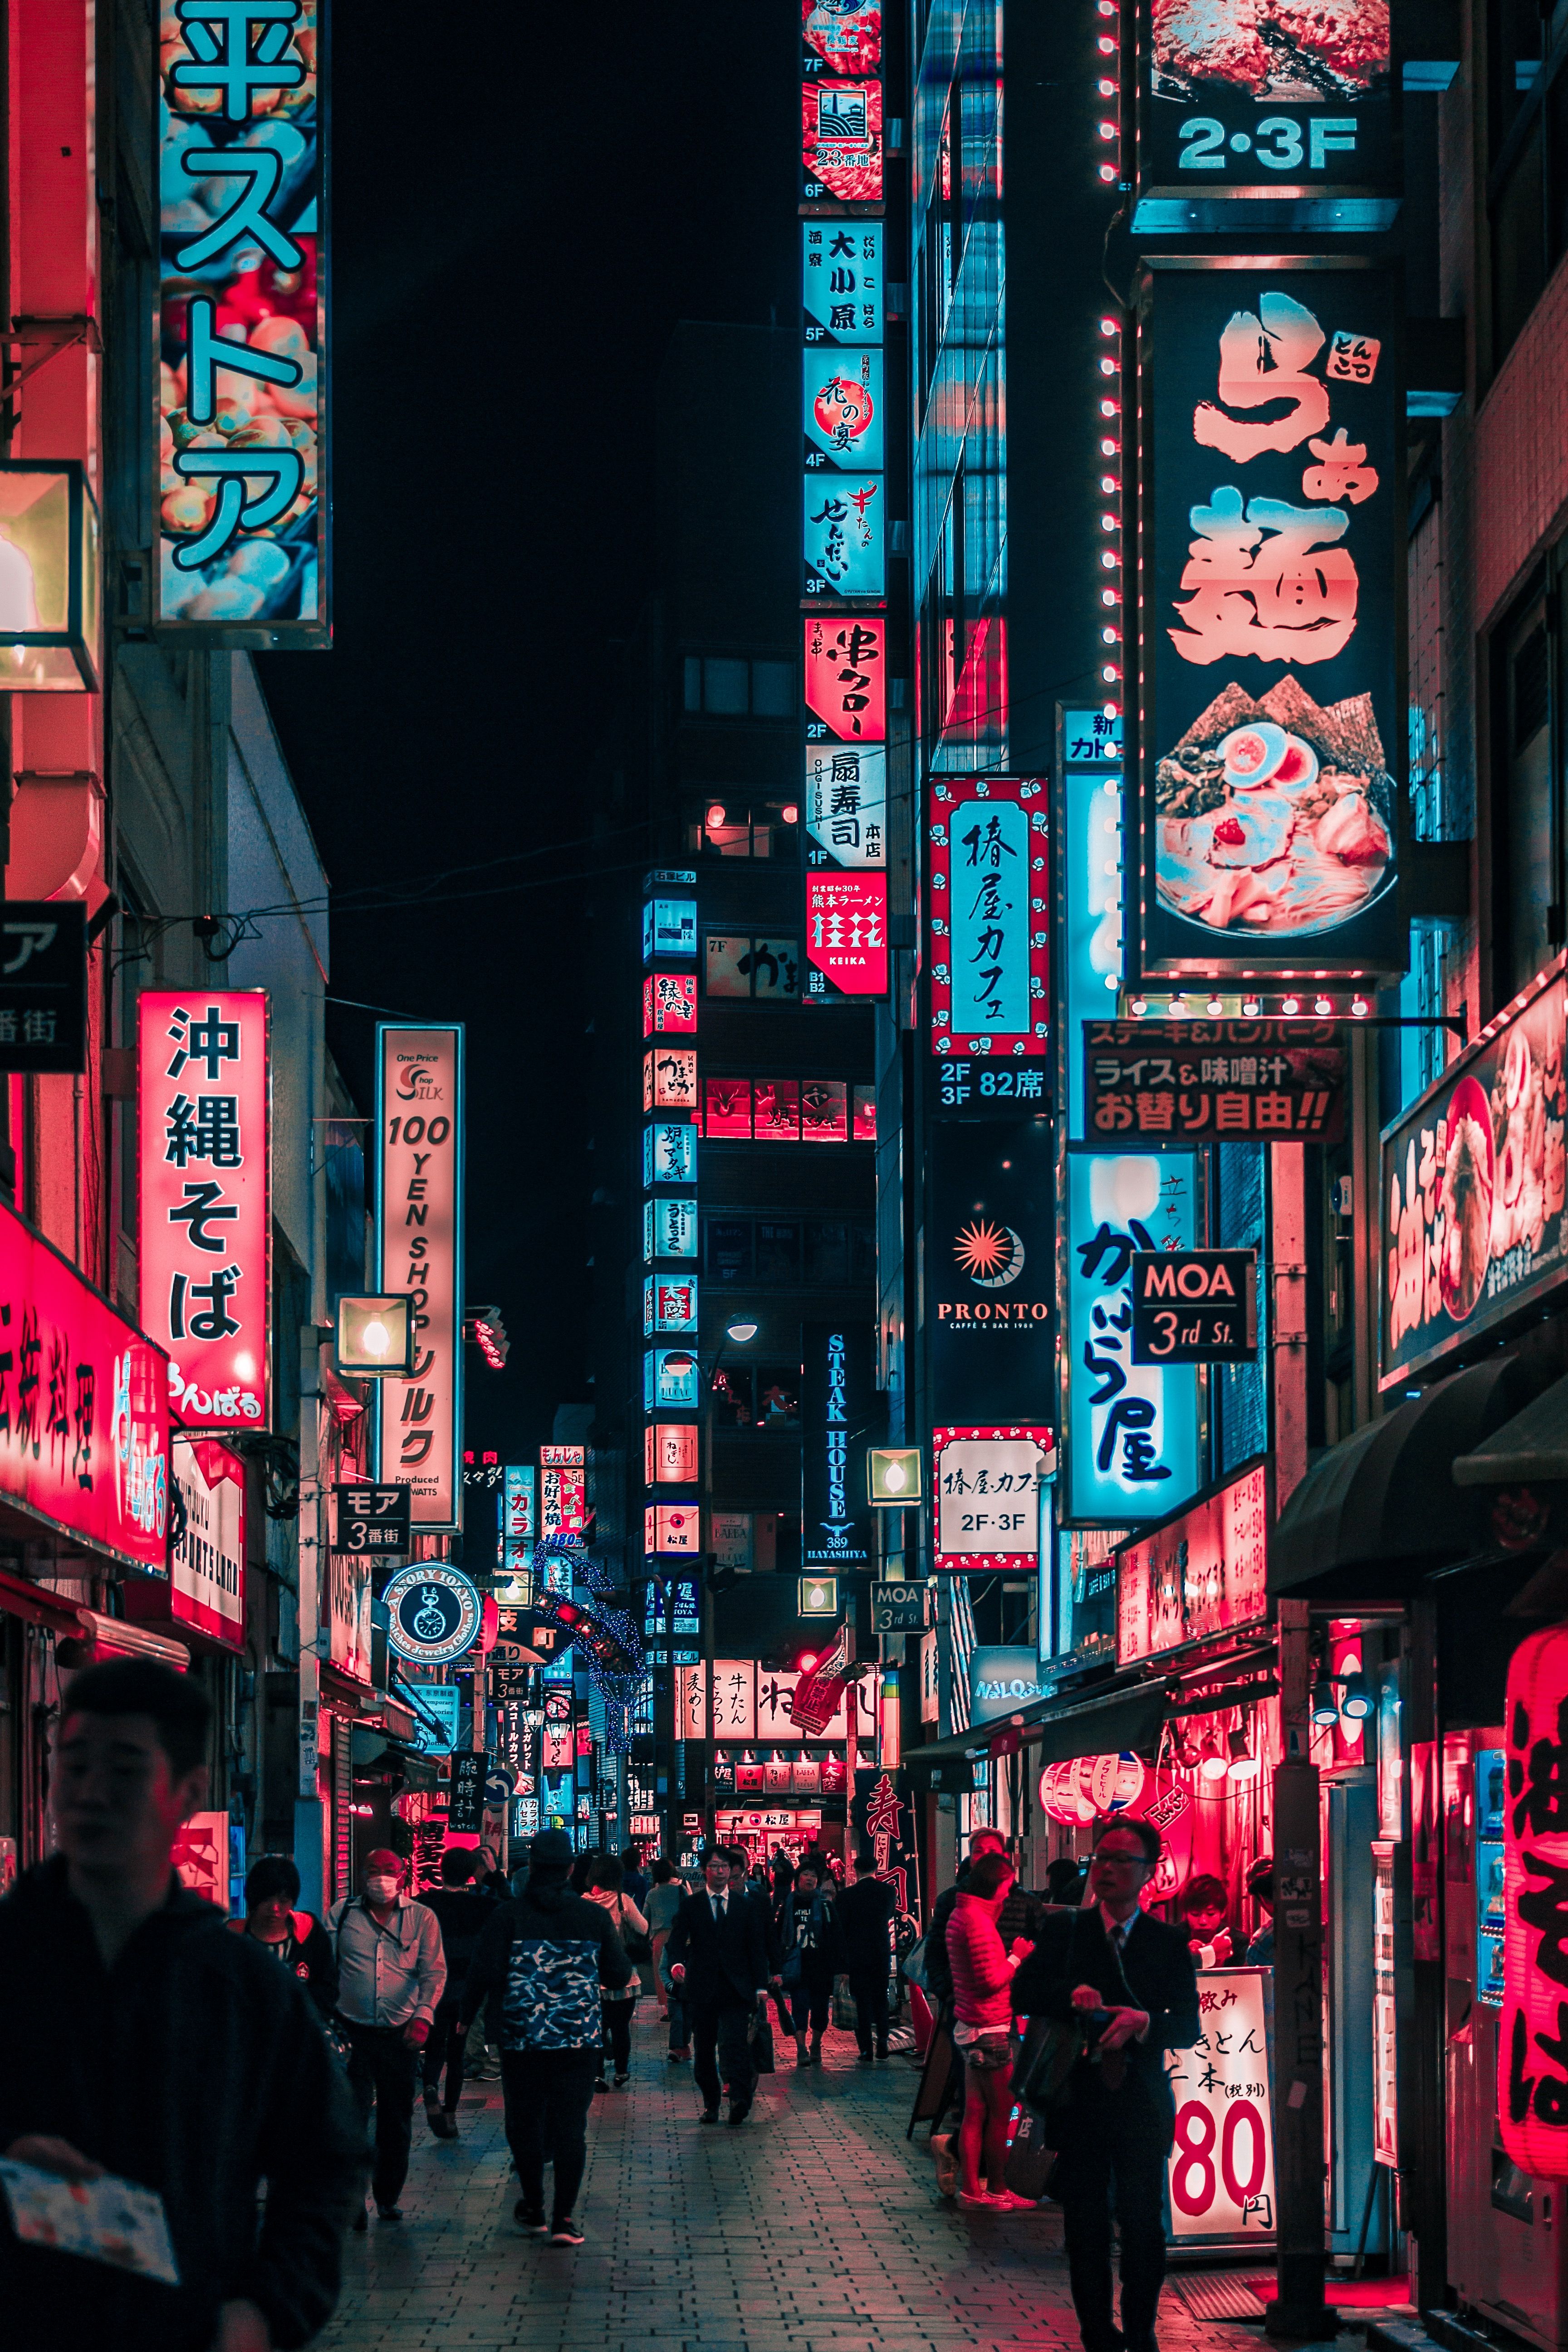 tokyo sfondi per iphone,area metropolitana,strada,rosso,area urbana,città